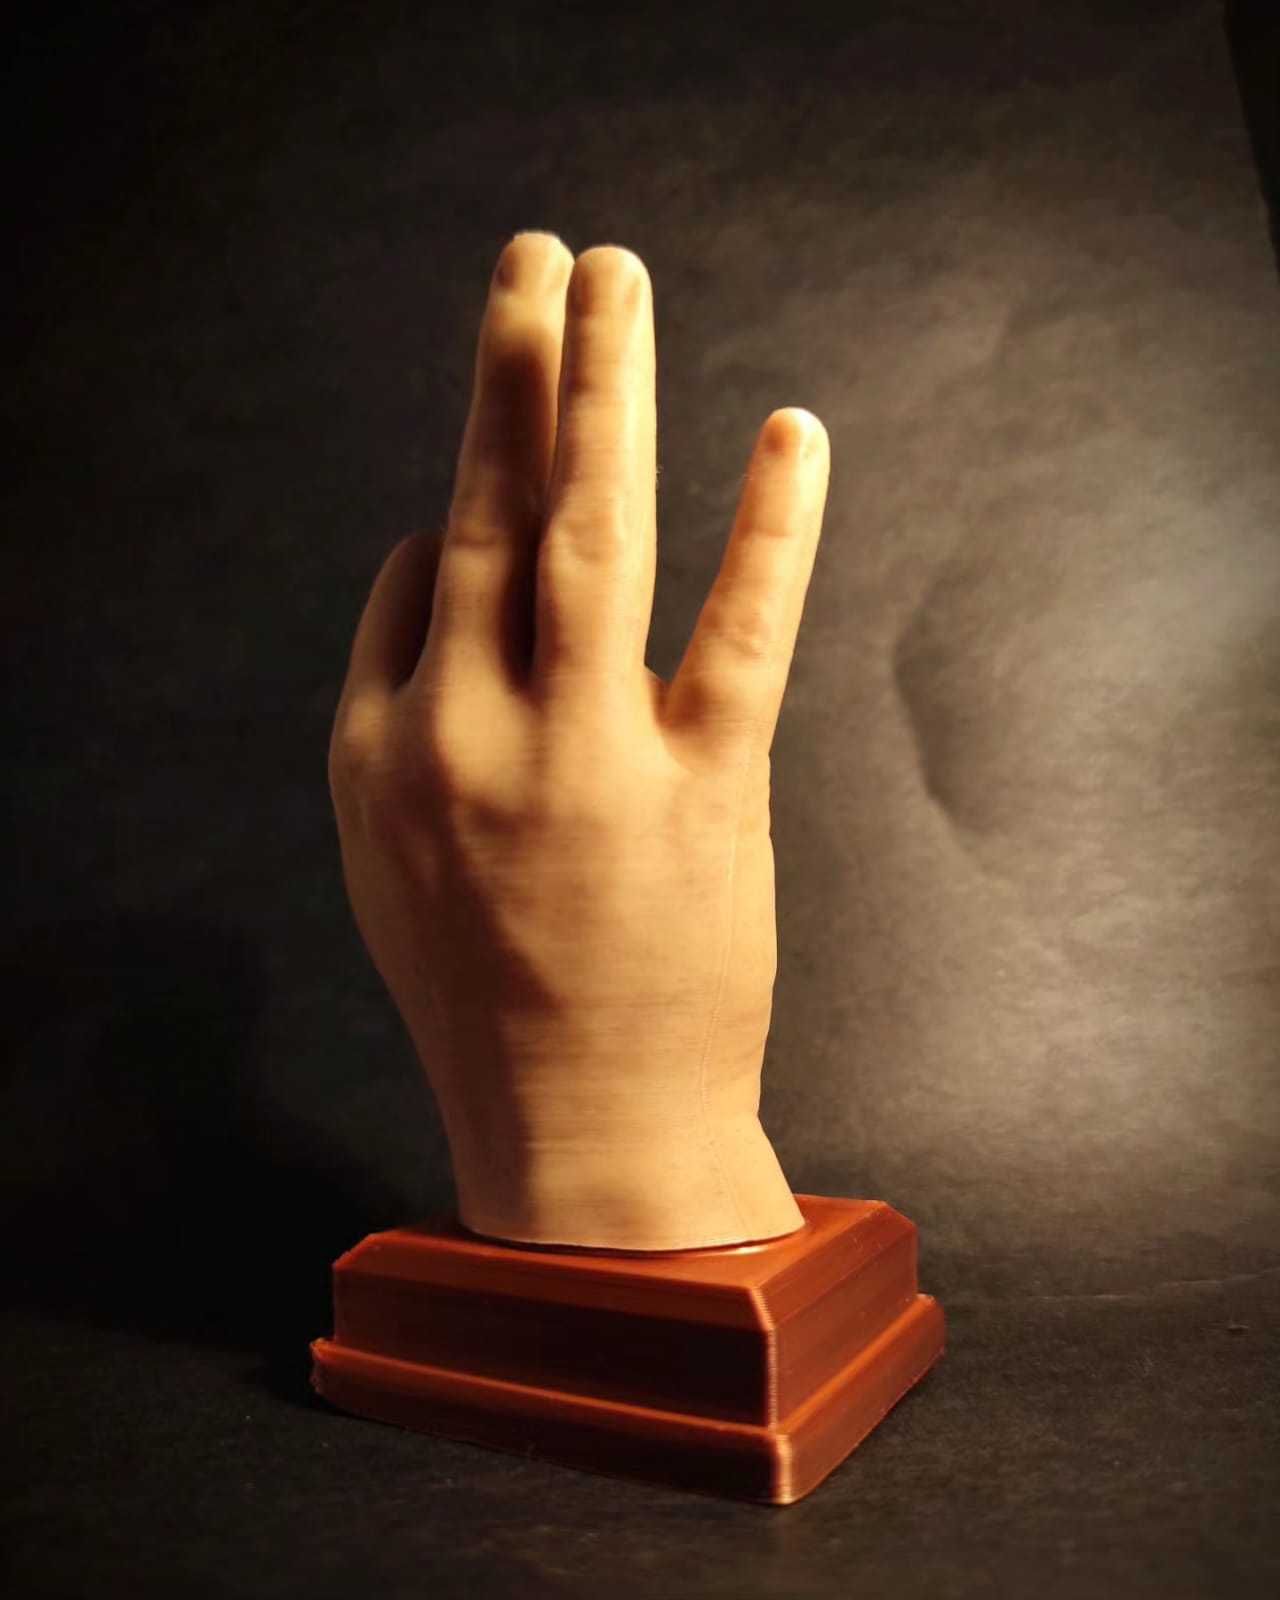 Mão Okay - OK Hand Signal - 3D Print